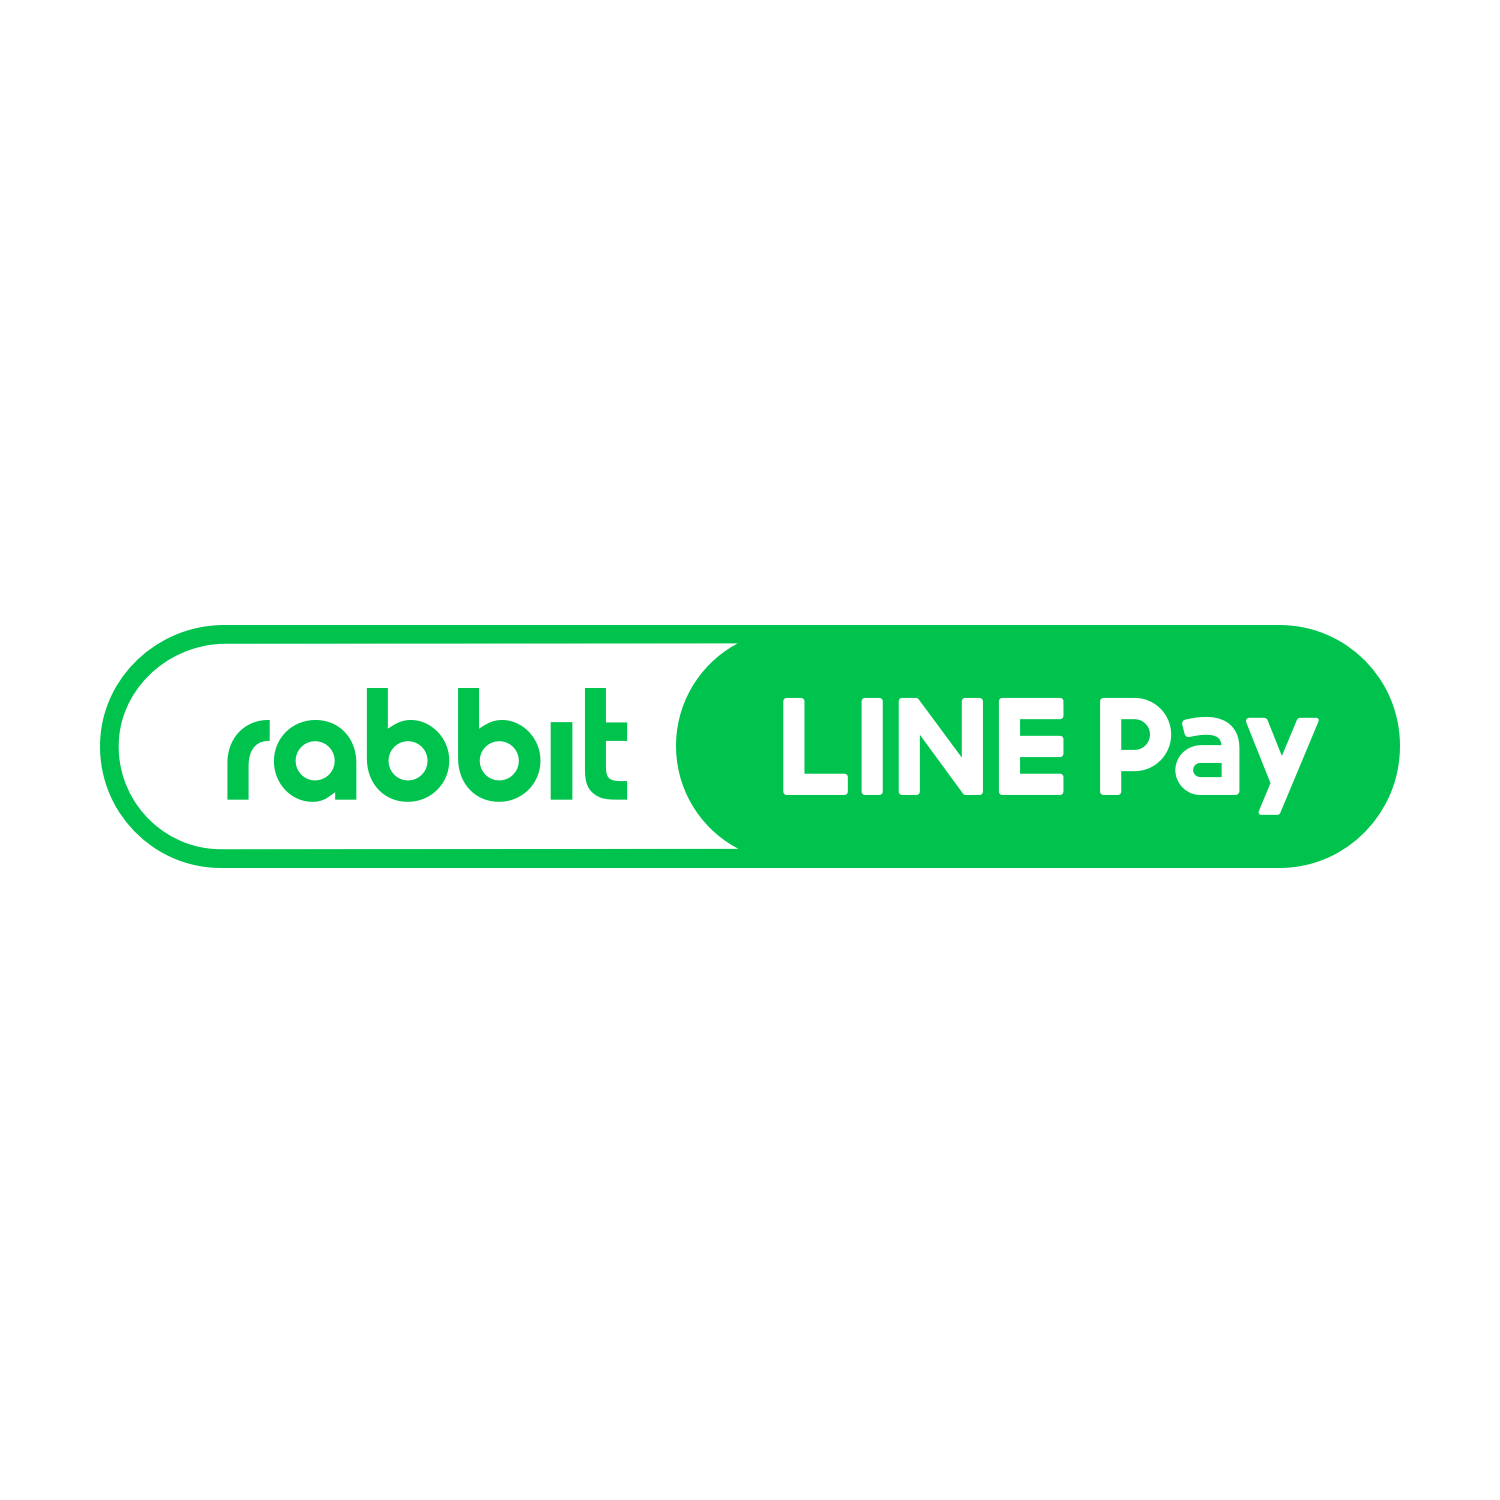 Rabbit Line Pay